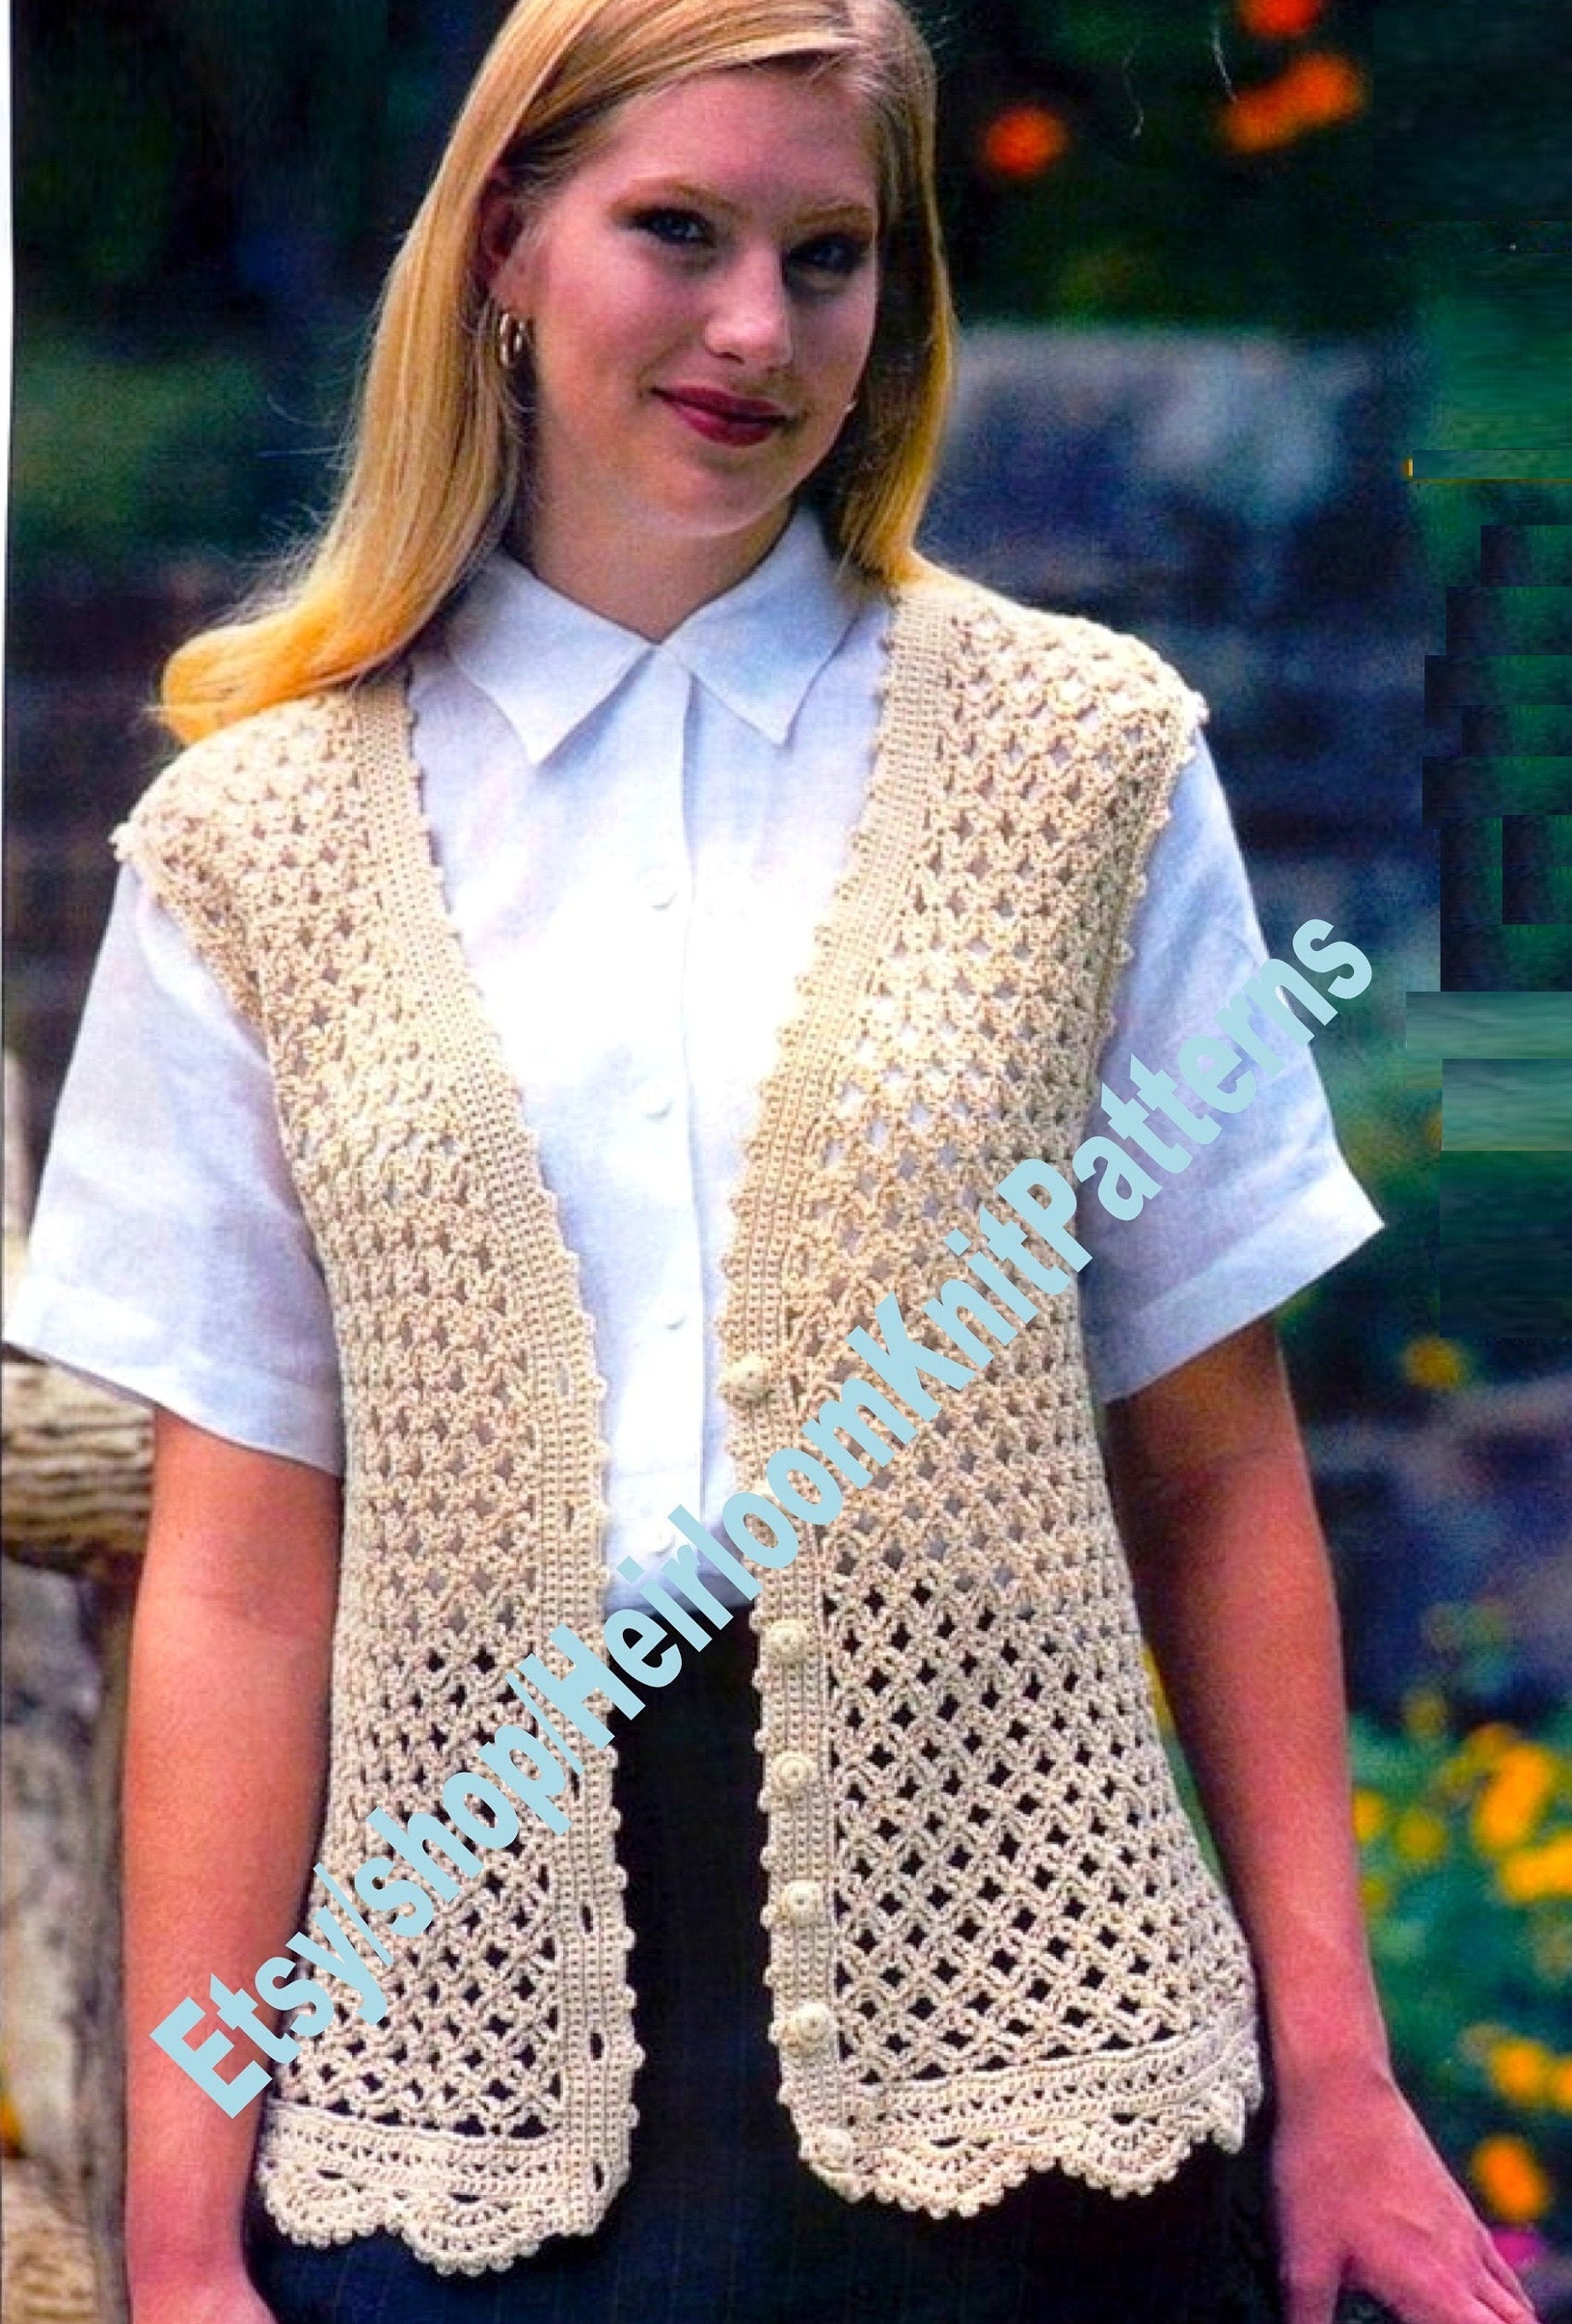 Handmade crochet sweater vest, 100% wool - campestre.al.gov.br